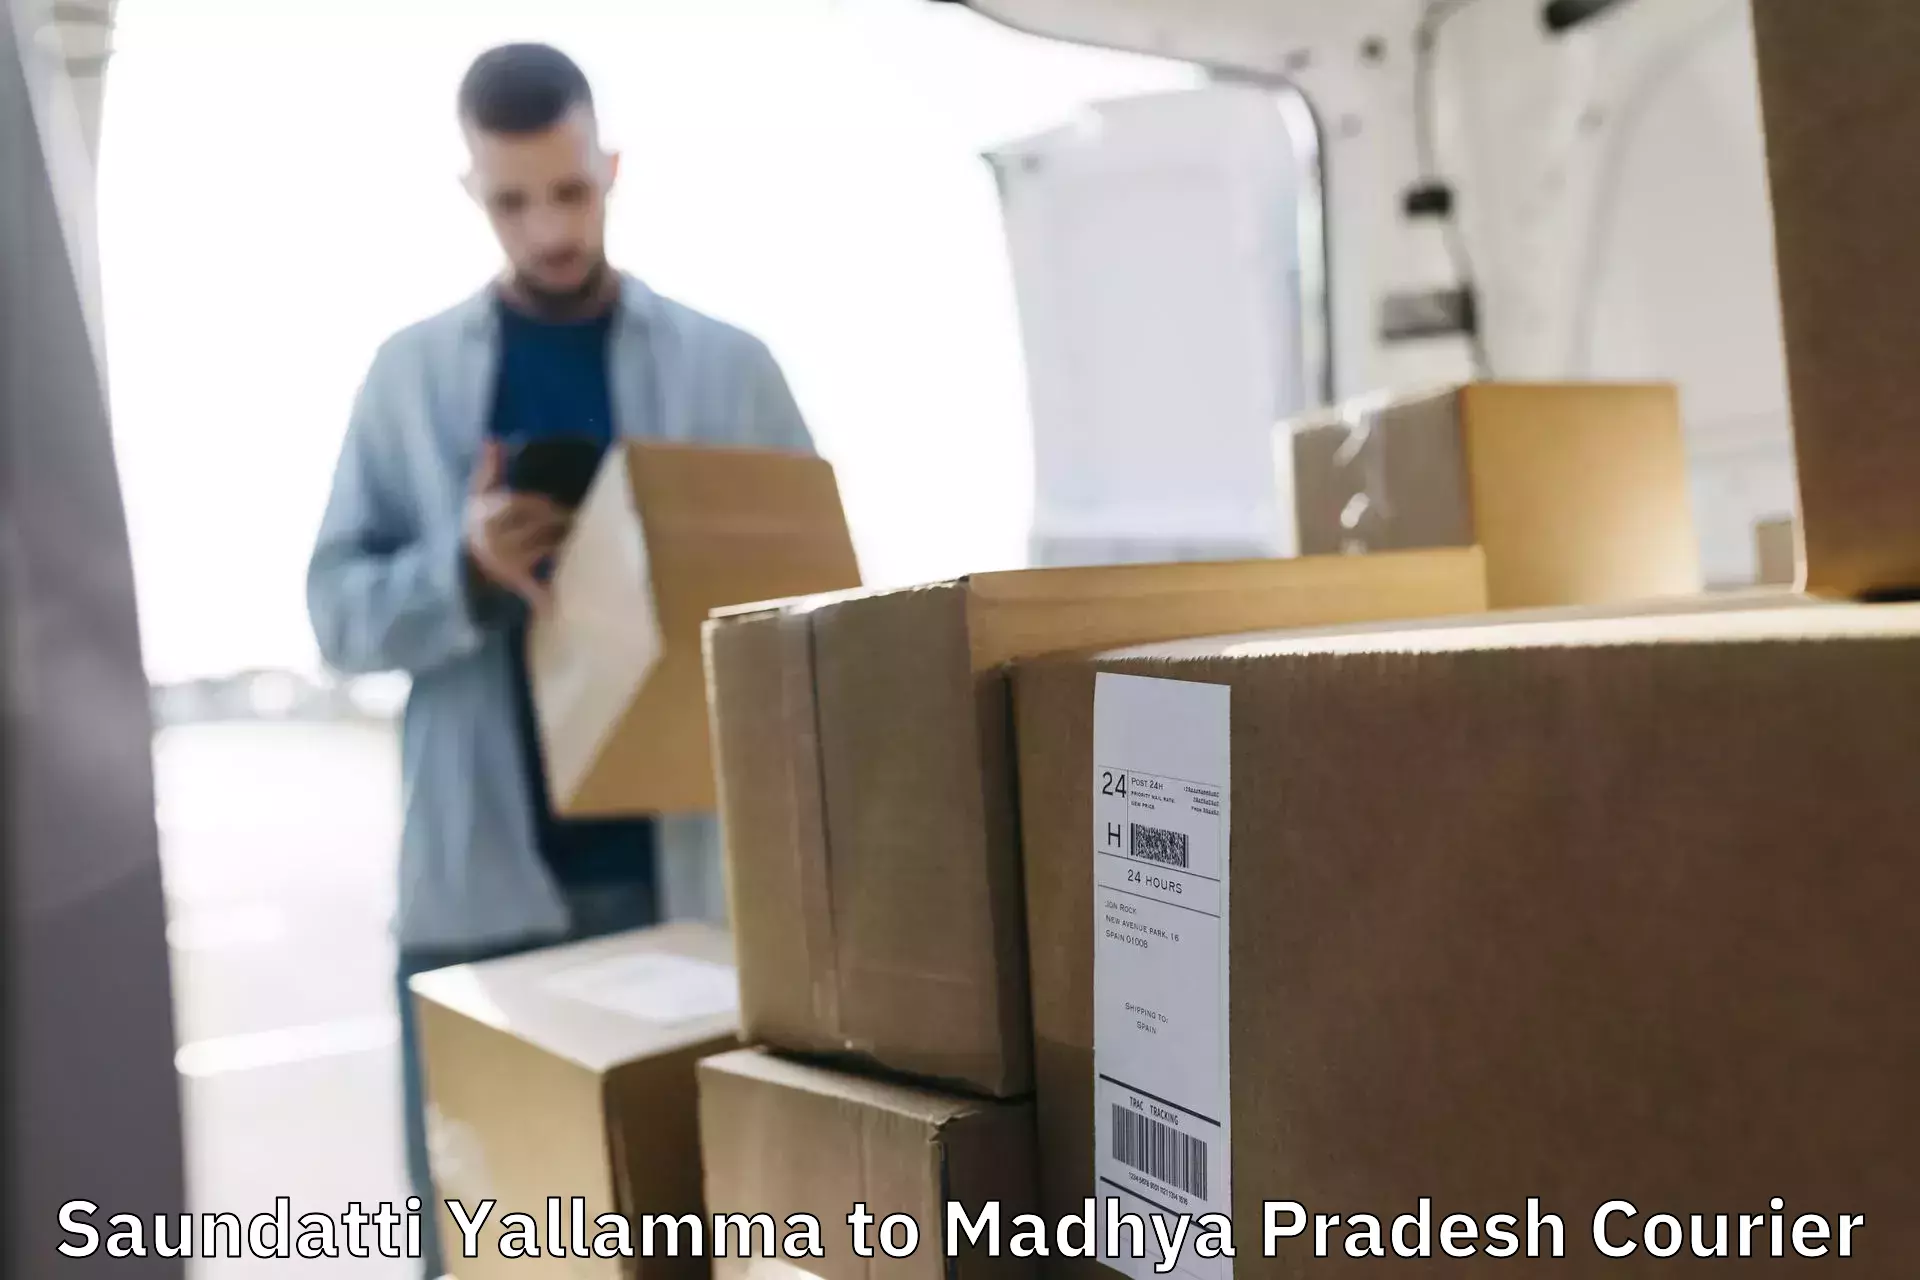 Reliable delivery network Saundatti Yallamma to Jaisinghnagar